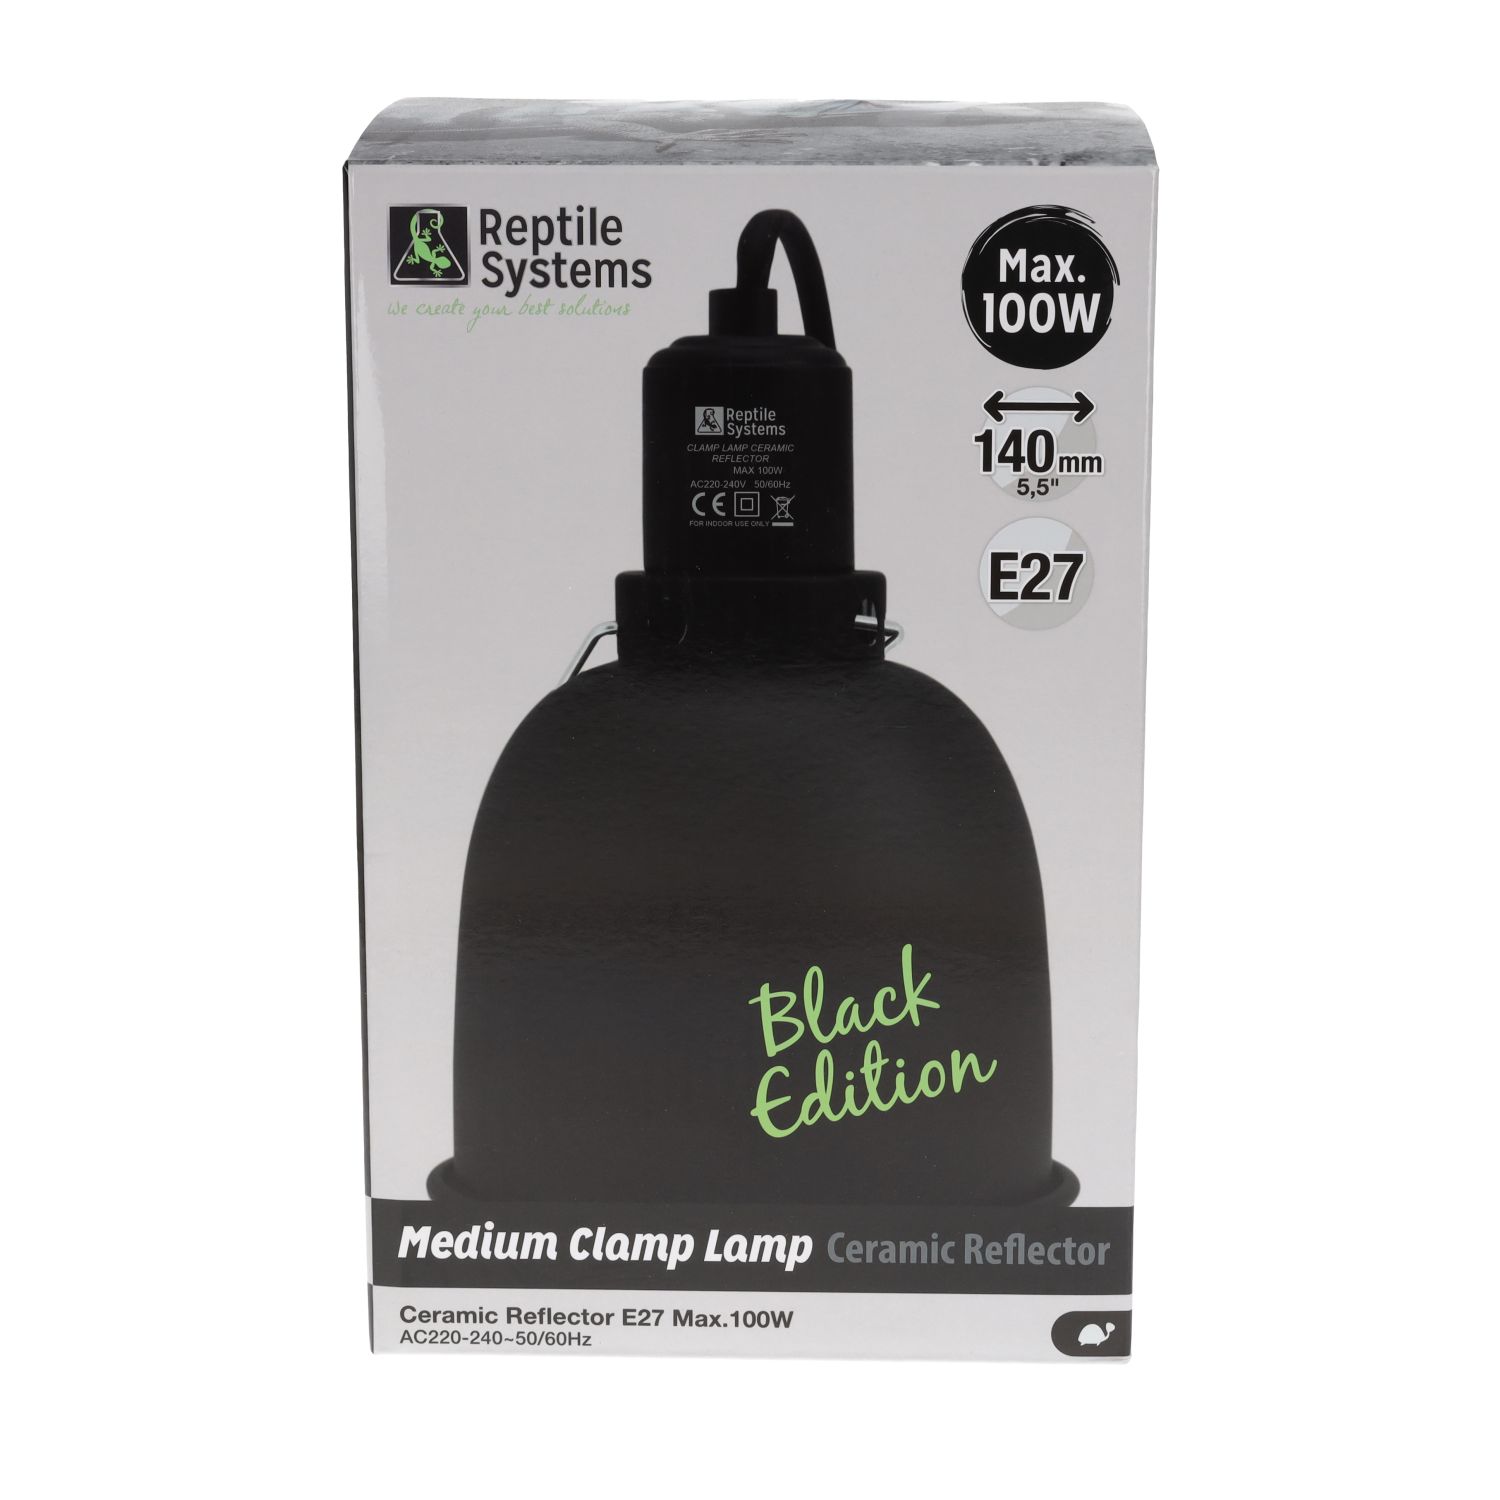 RS Clamp Lamp Black Edition Medium